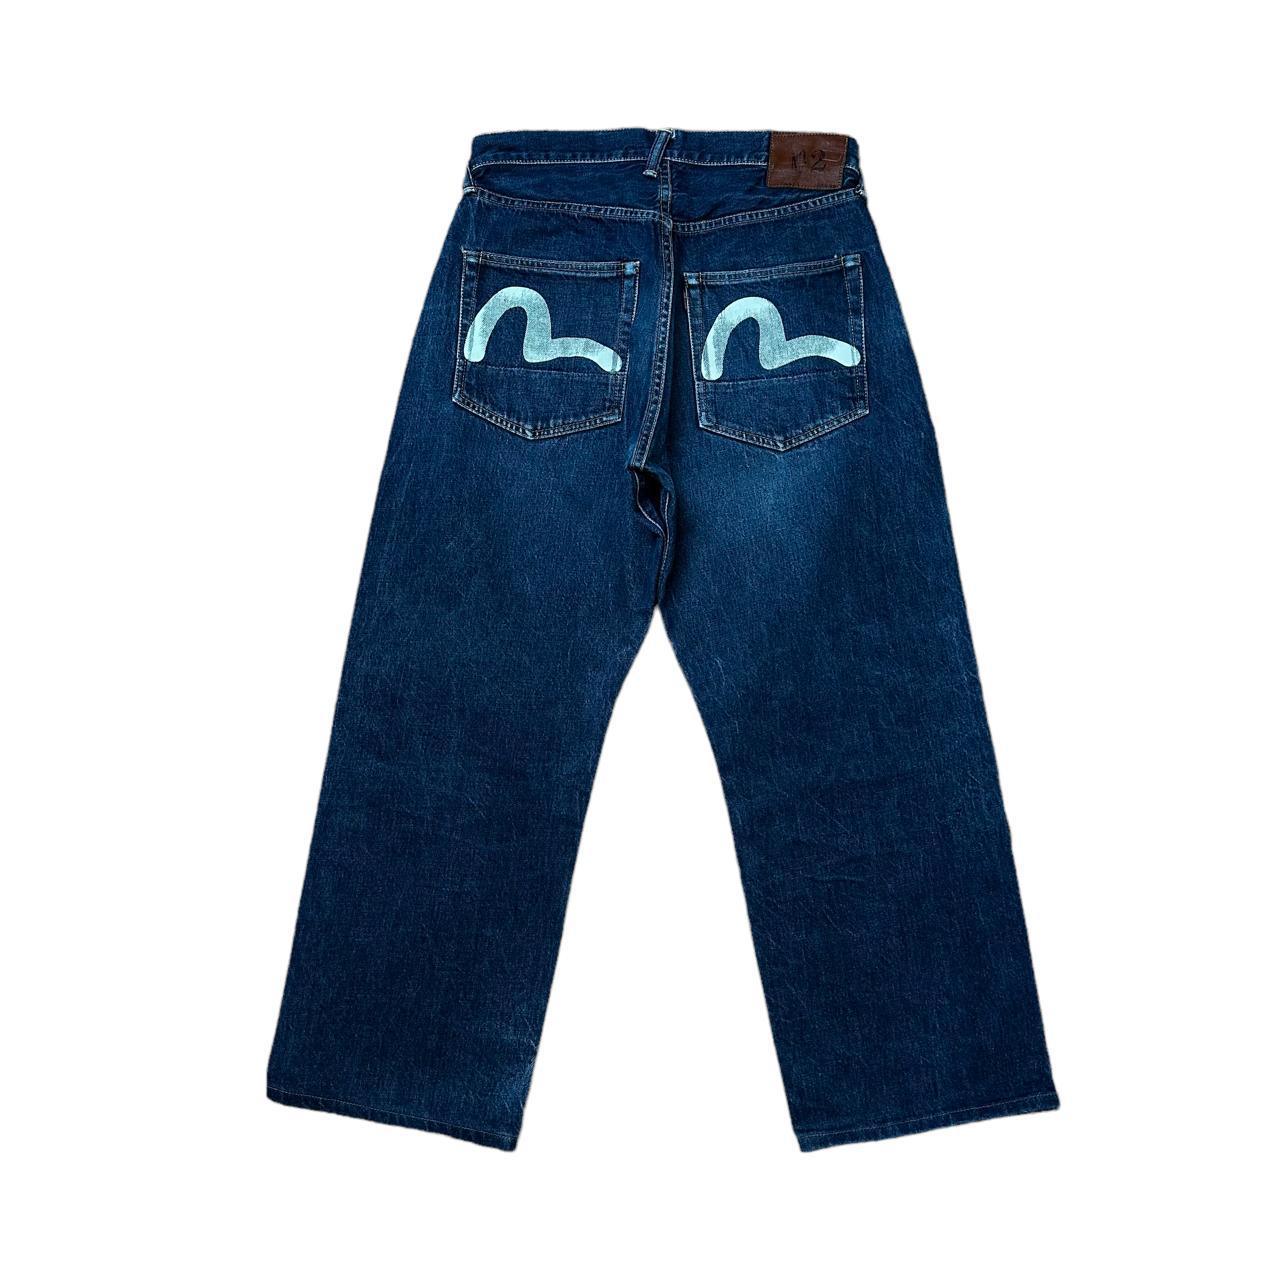 EVISU Bottom 2001/ no.2/ Red Ear/ Gull/ Denim jeans - Known Source